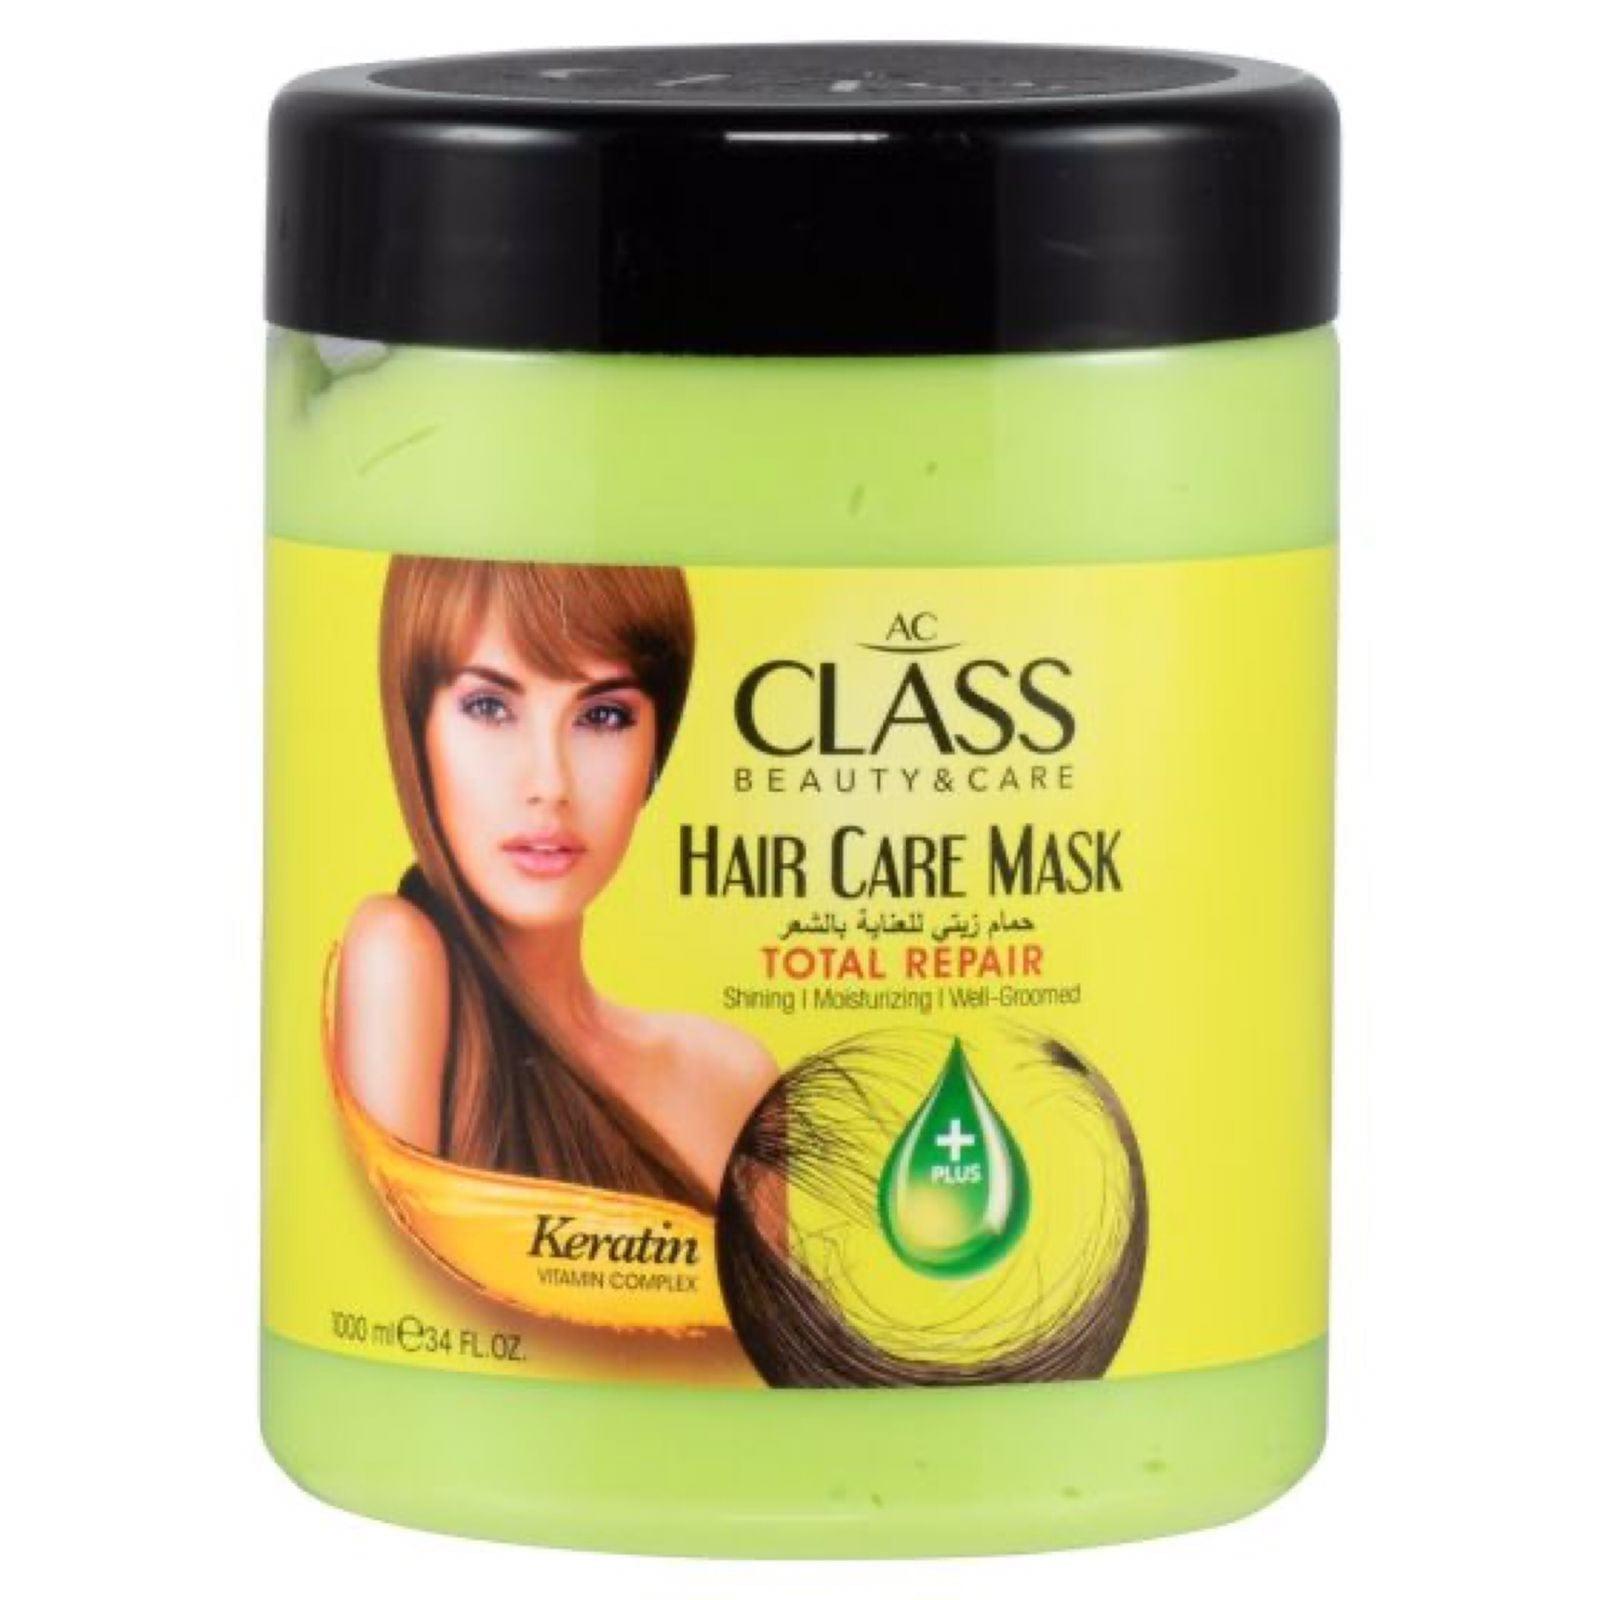 Redist AC Class Hair Care Mask Keratin 1000ml